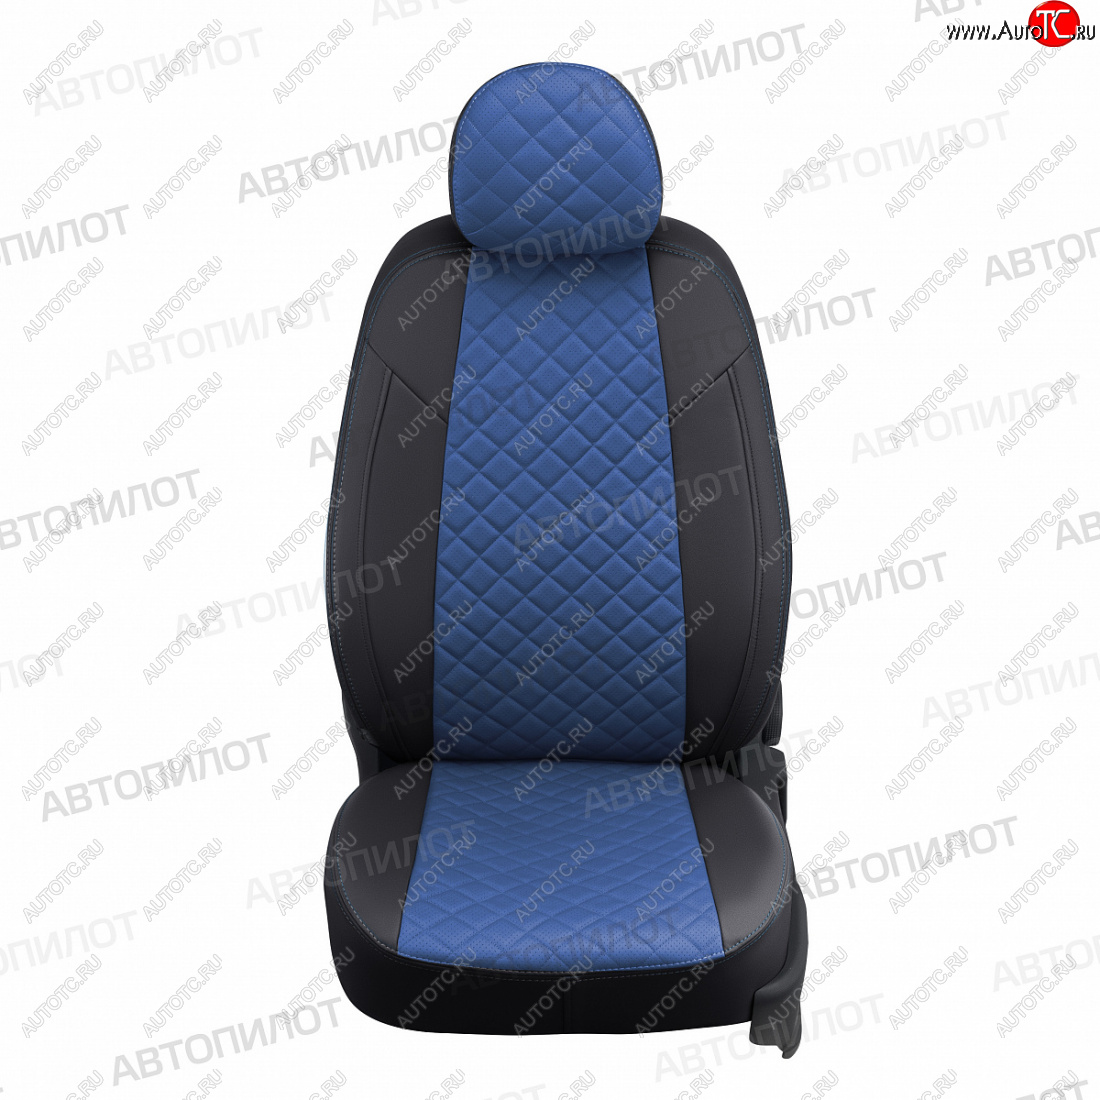 13 999 р. Чехлы сидений (экокожа) Автопилот Ромб  KIA Ceed  1 ED (2006-2012) (черный/синий)